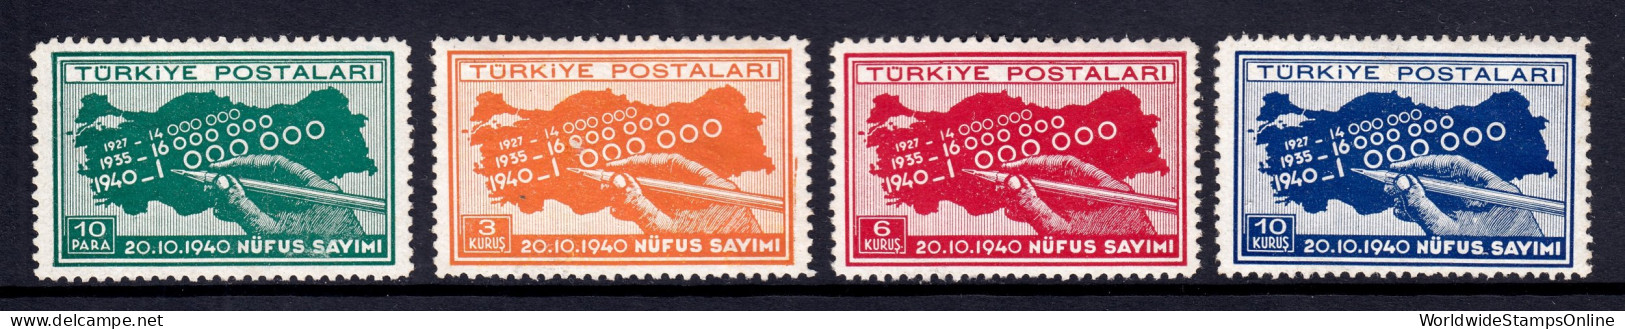 Turkey - Scott #851-854 - MH - SCV $5.50 - Unused Stamps